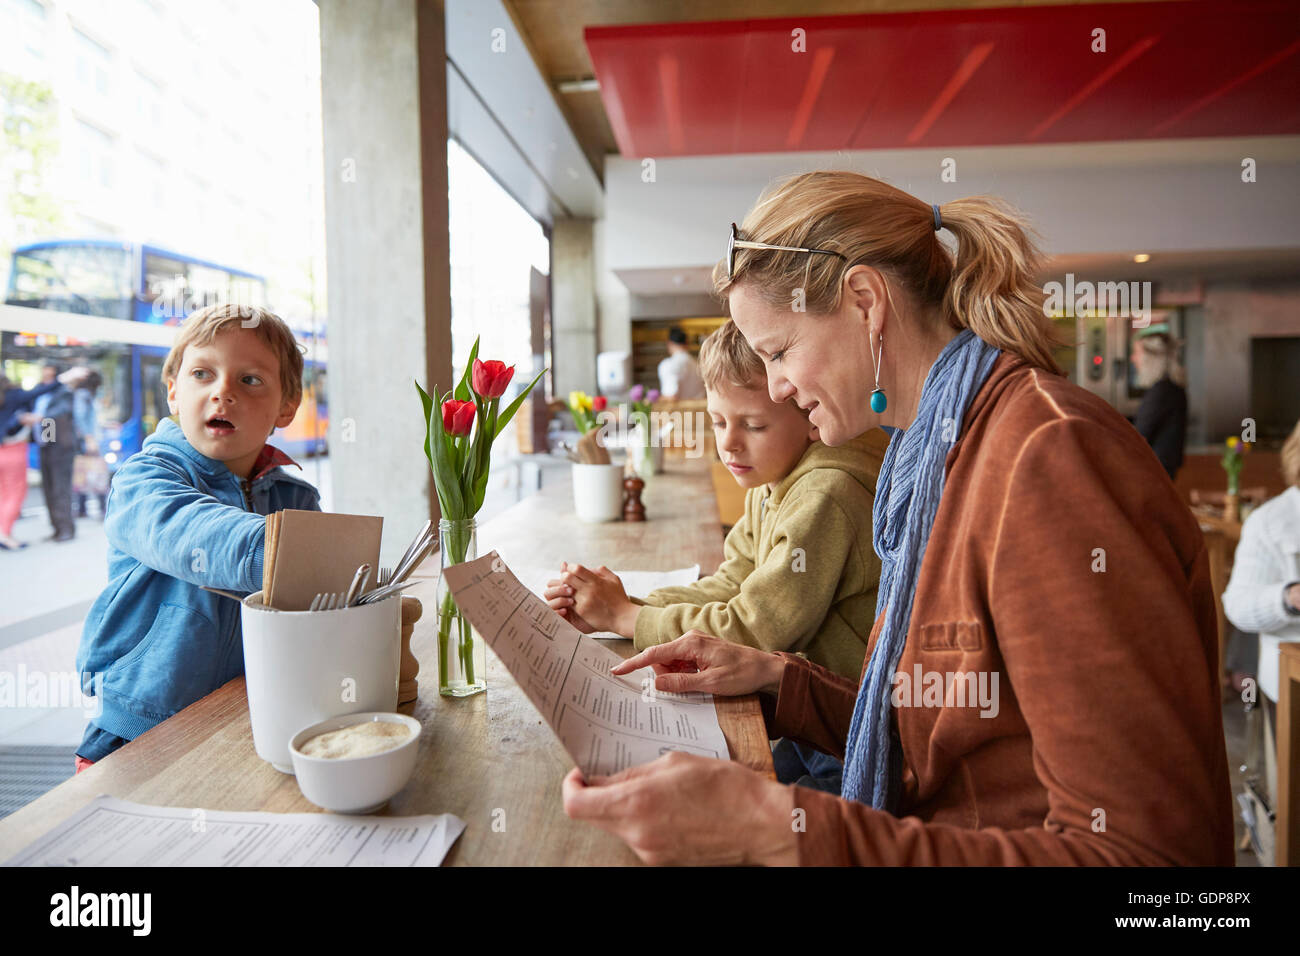 Mother and son at cafe looking at menu Stock Photo